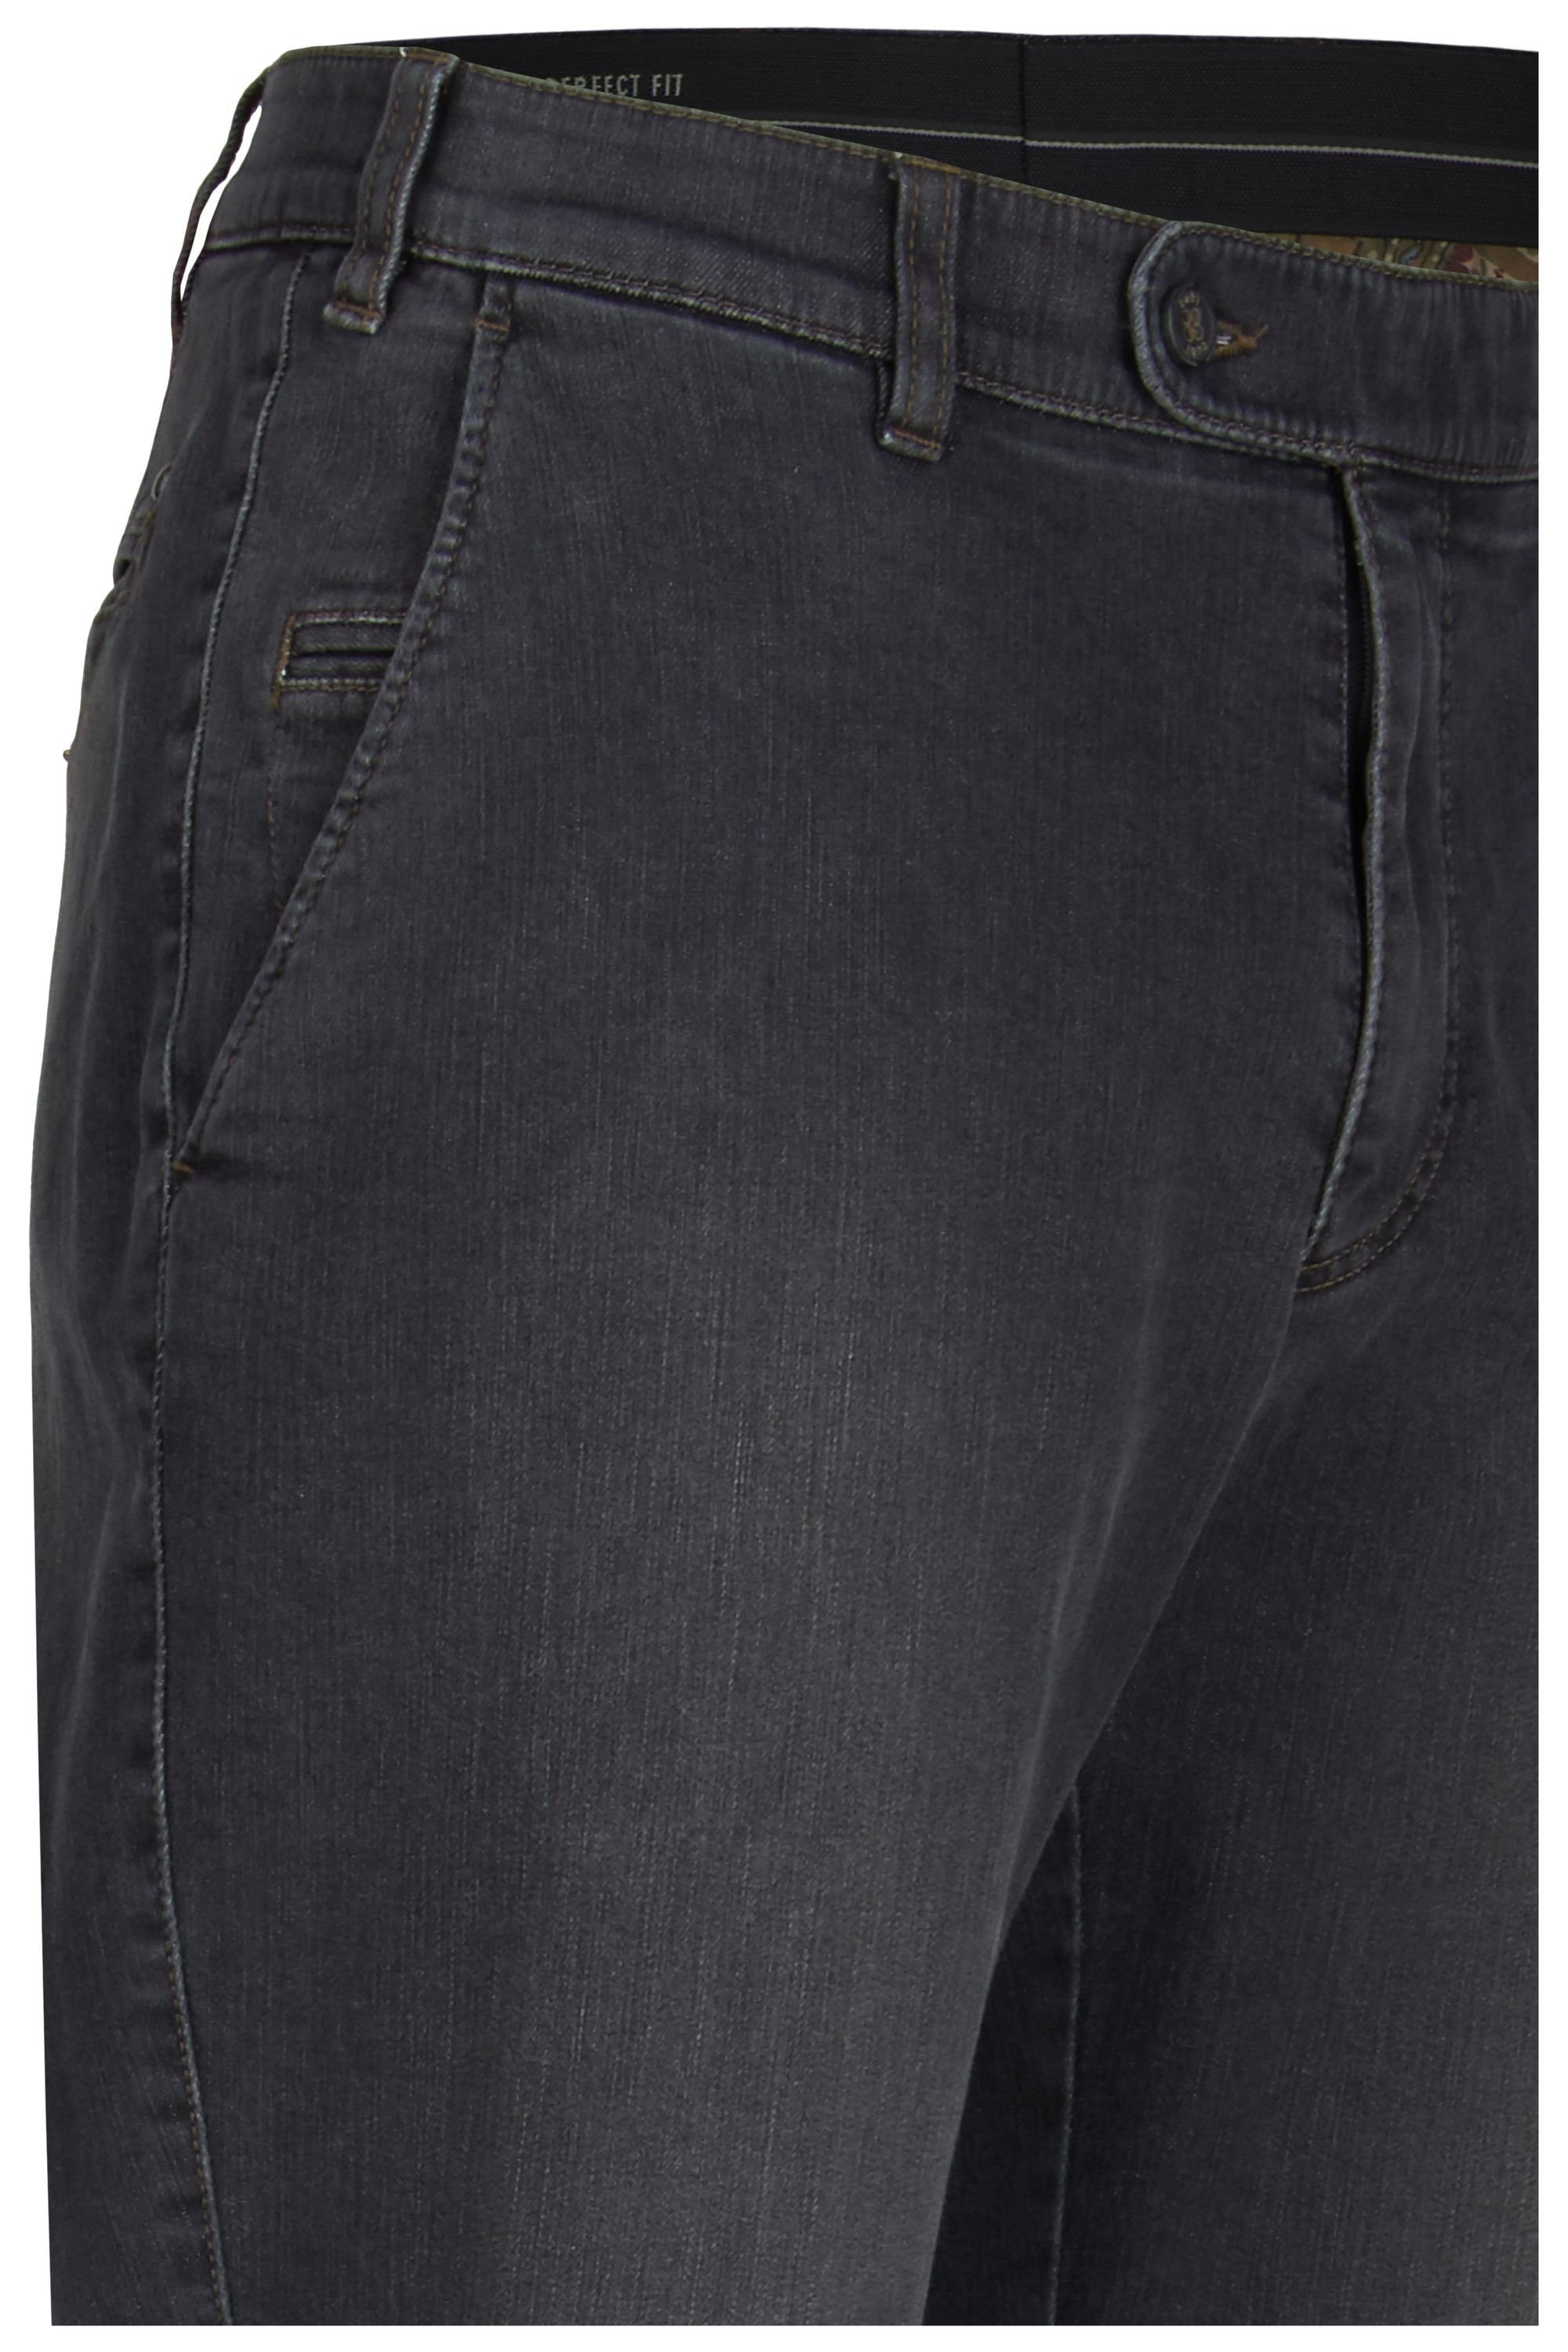 Herren used 526 Stretch aubi Perfect Jeans Hose Bequeme Baumwolle Fit Jeans Modell soft aubi: High Flex aus (53) grey